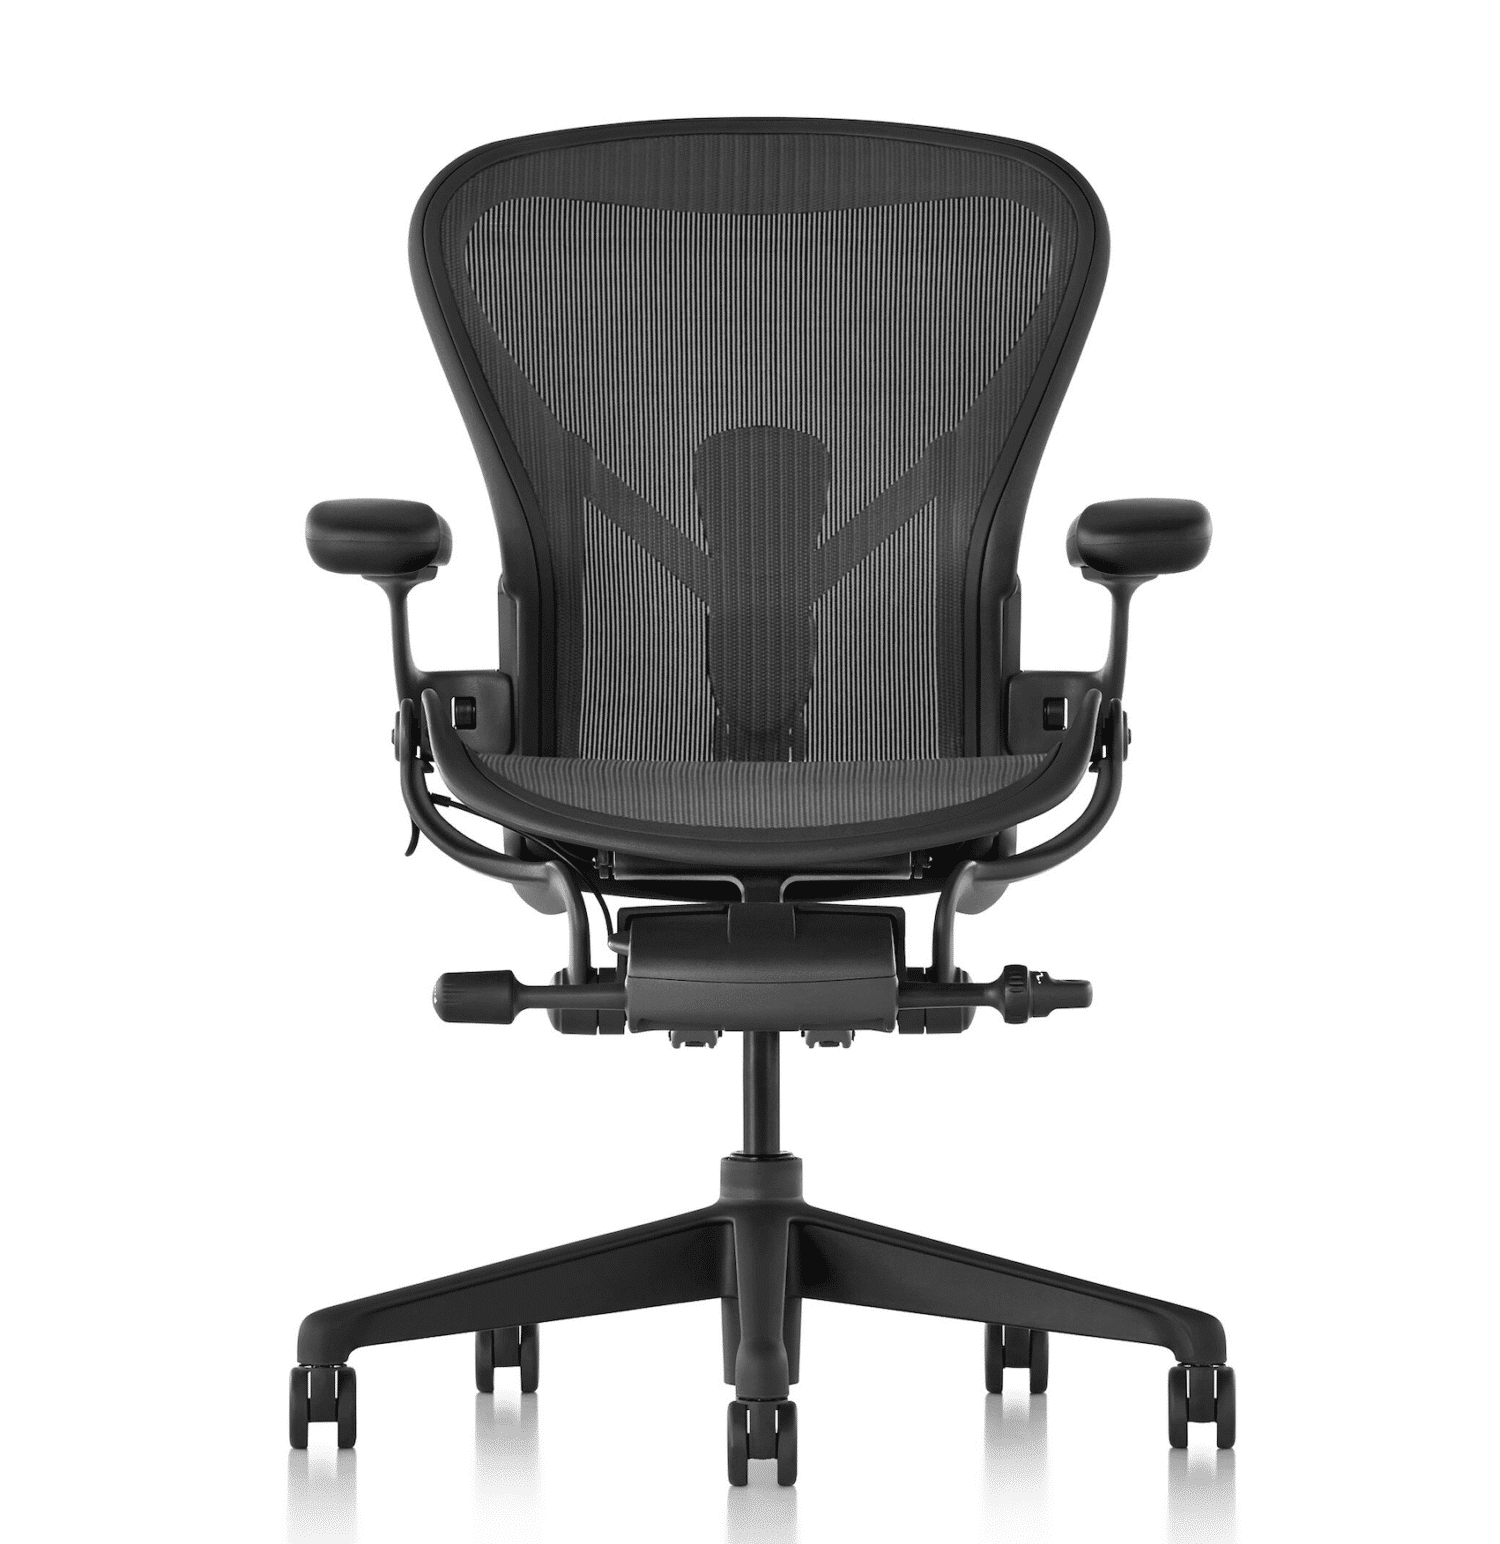 Herman Miller Aeron Chair, design your own